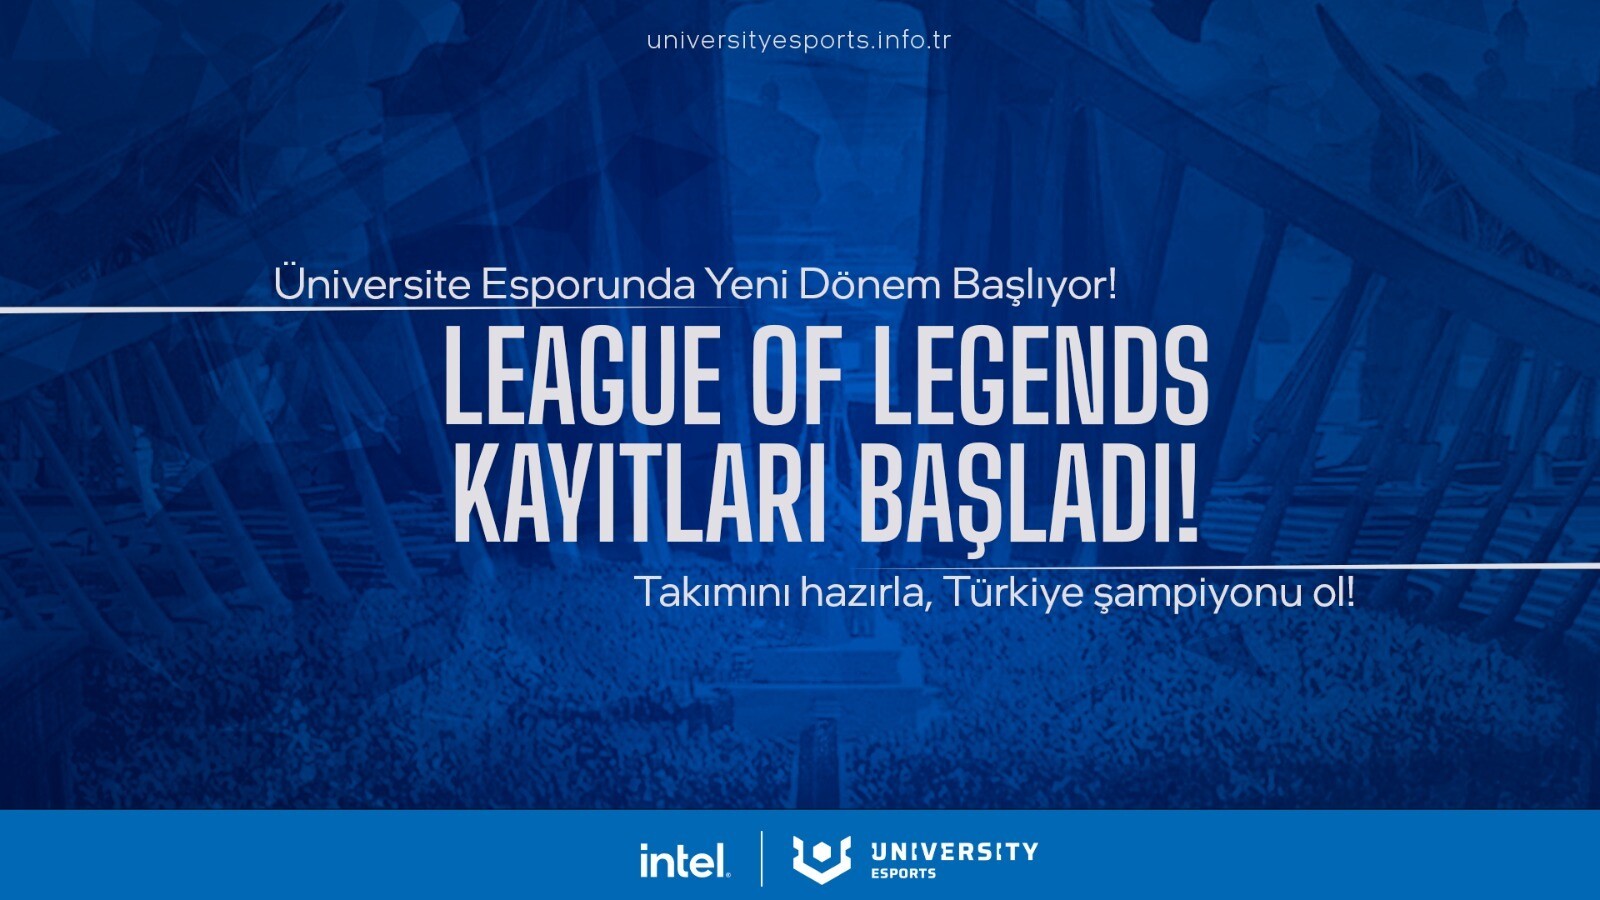 Intel University Esports 1920x1080 1